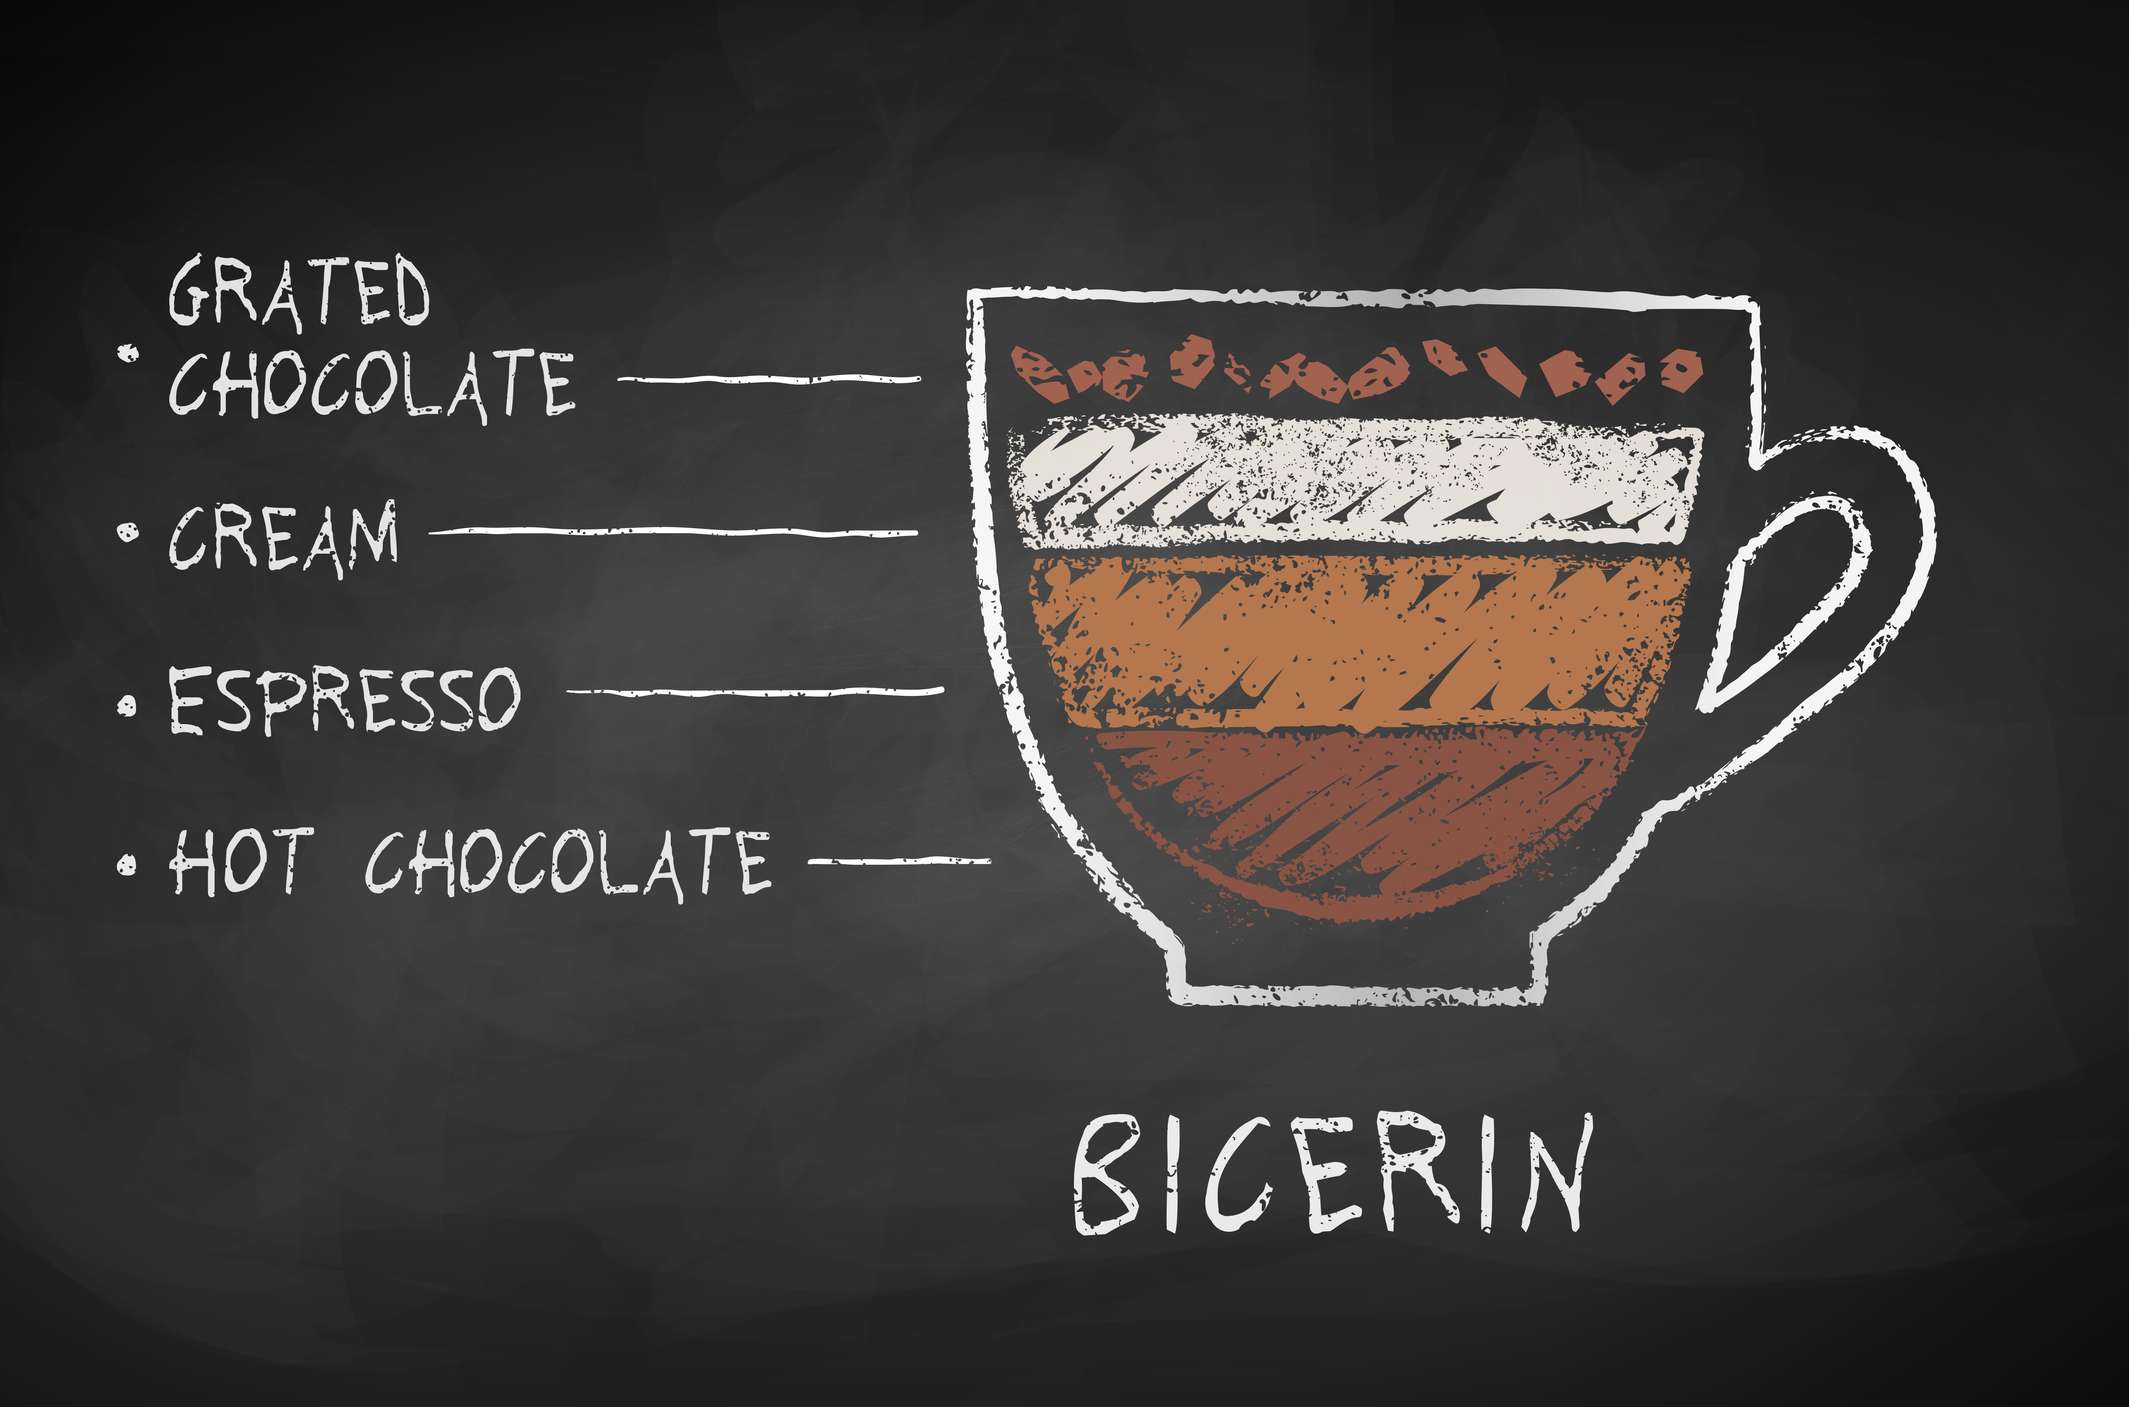 The Italian Coffee Series: Torino e i suoi bar storici